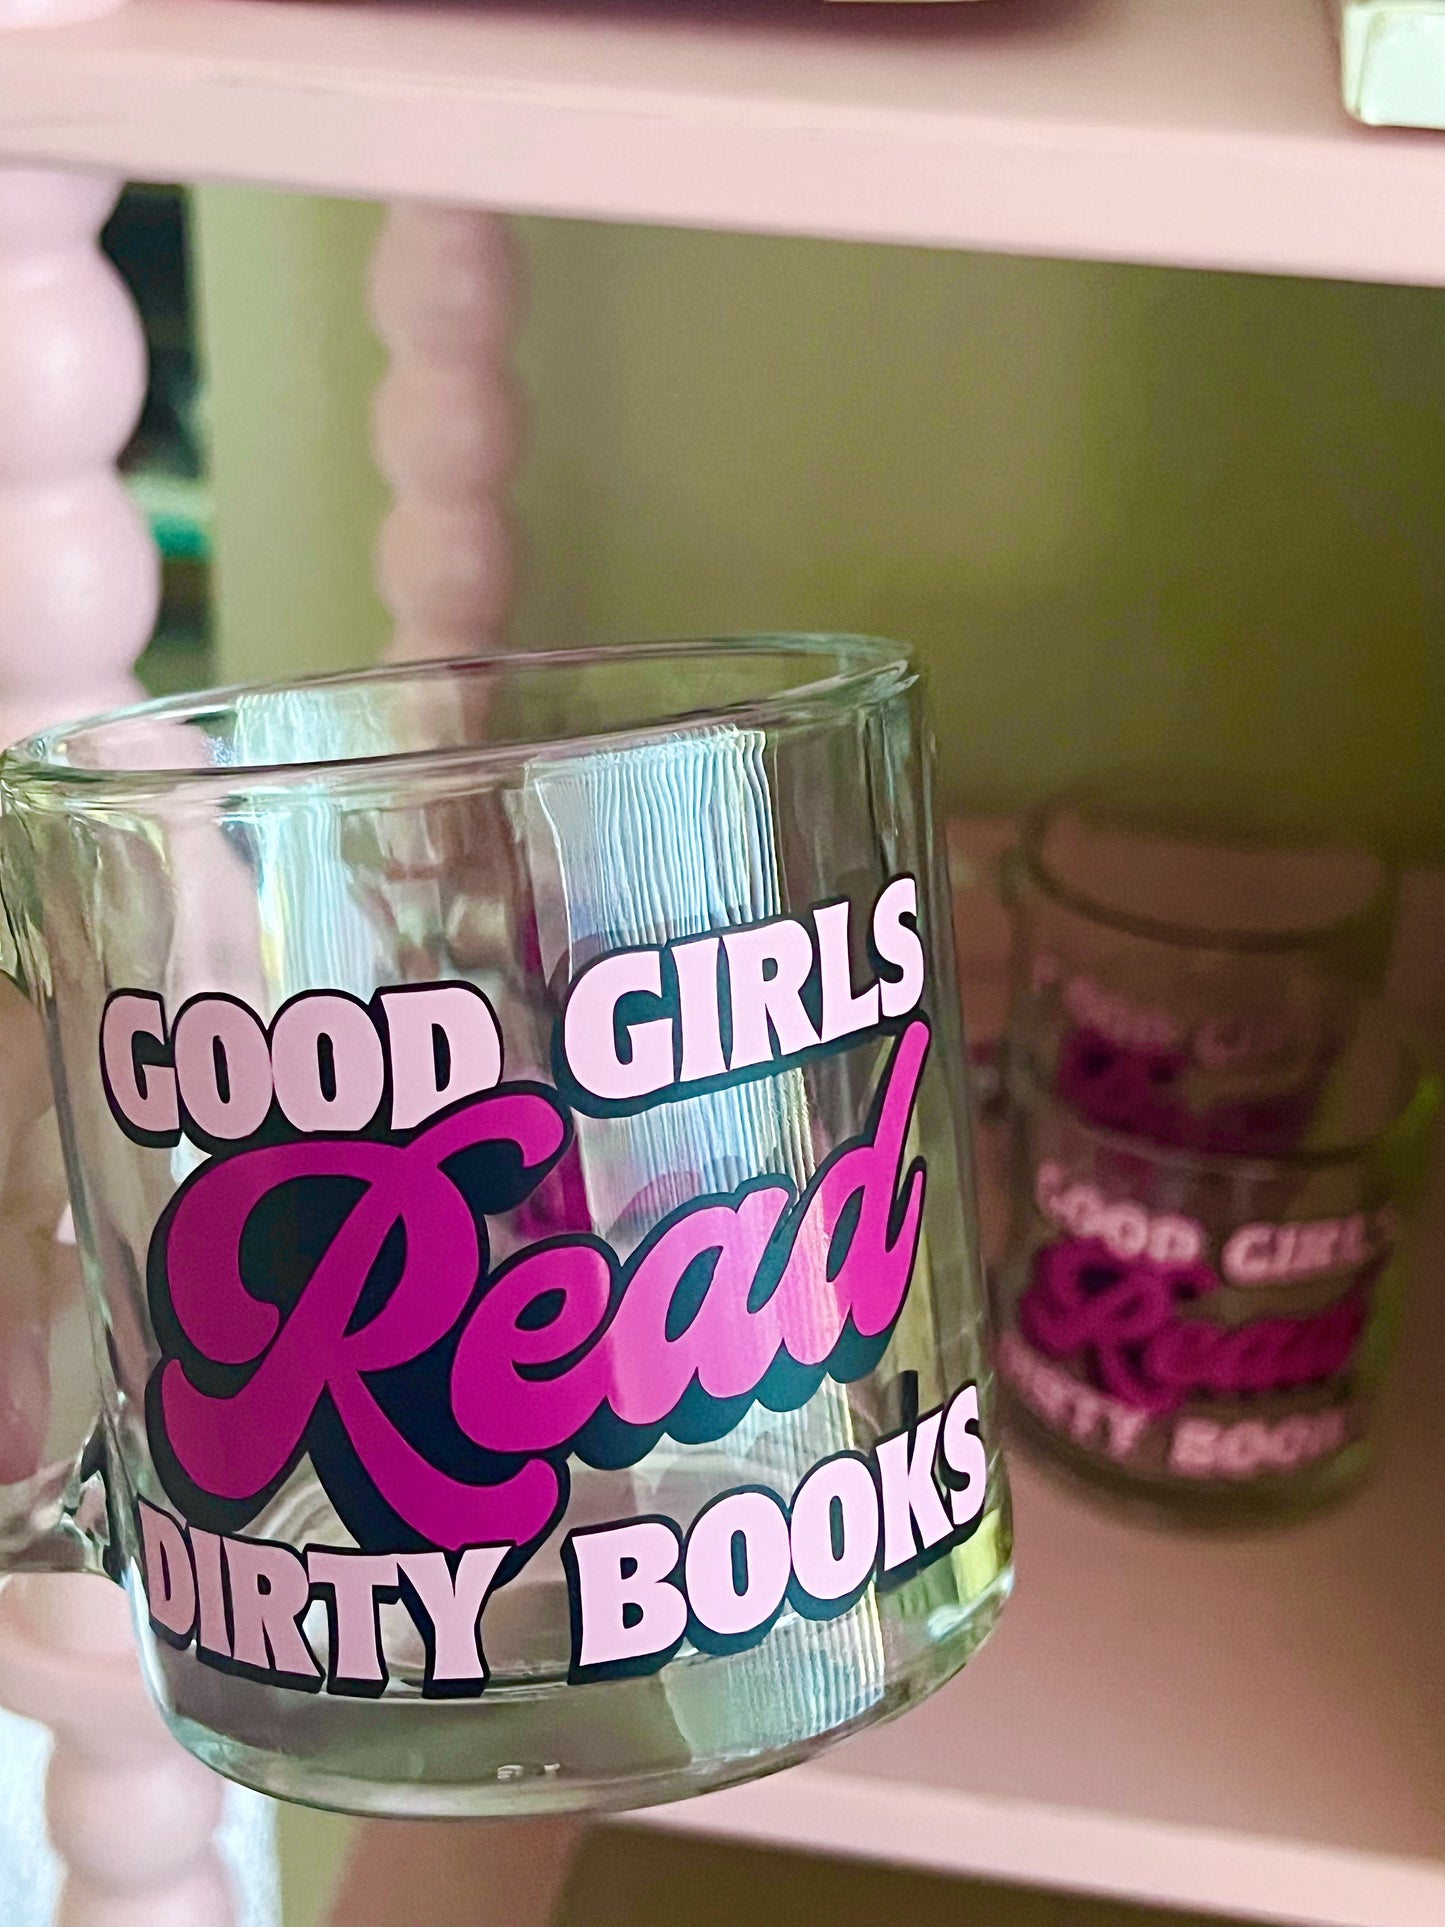 Good Girls Read Dirty Books 13oz Glass Mug